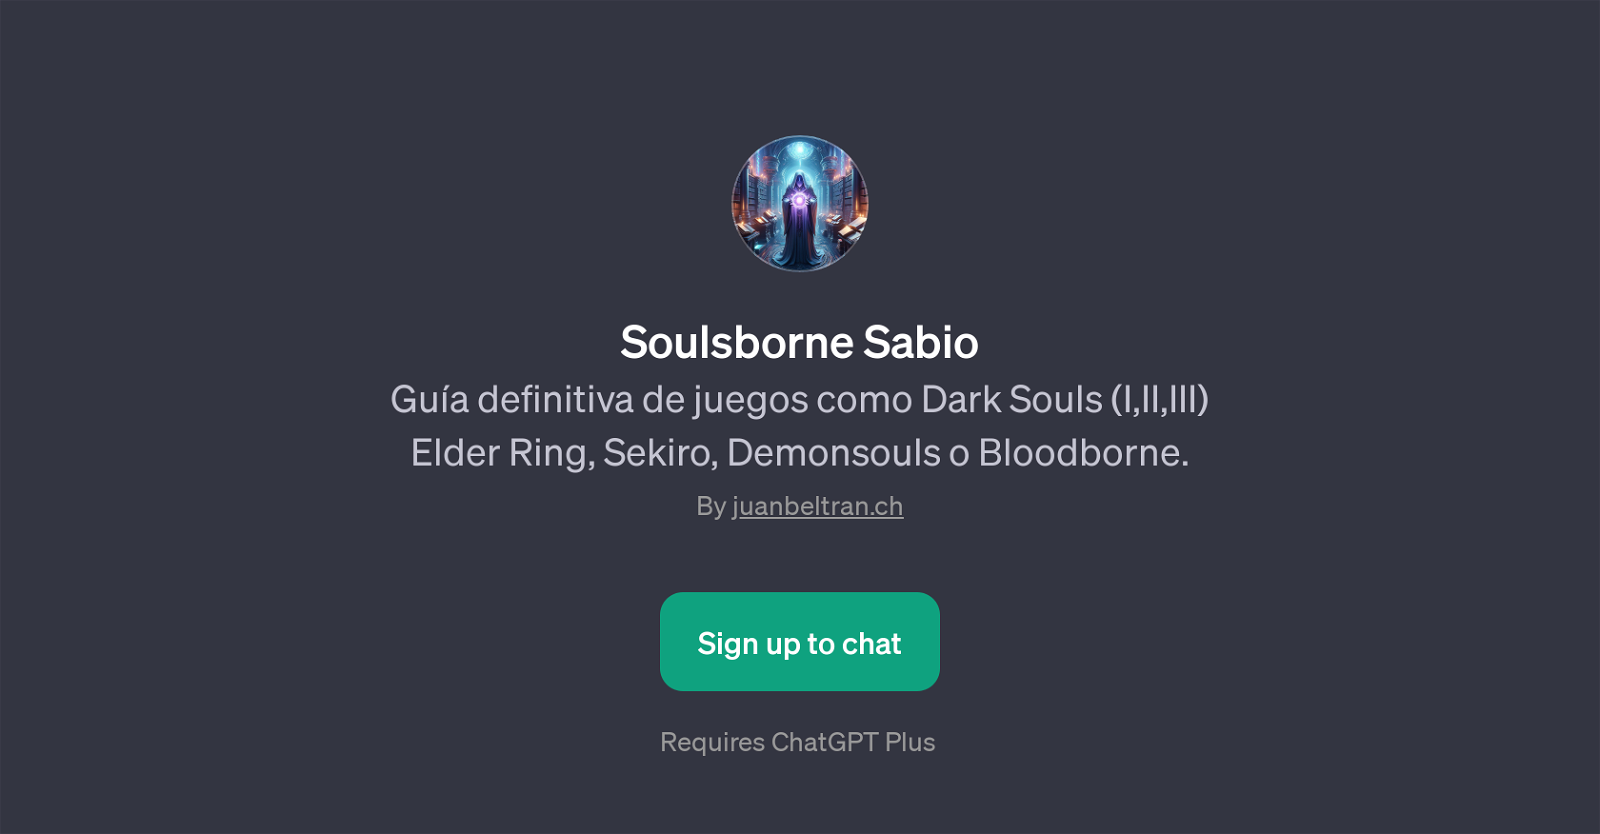 Soulsborne Sabio website